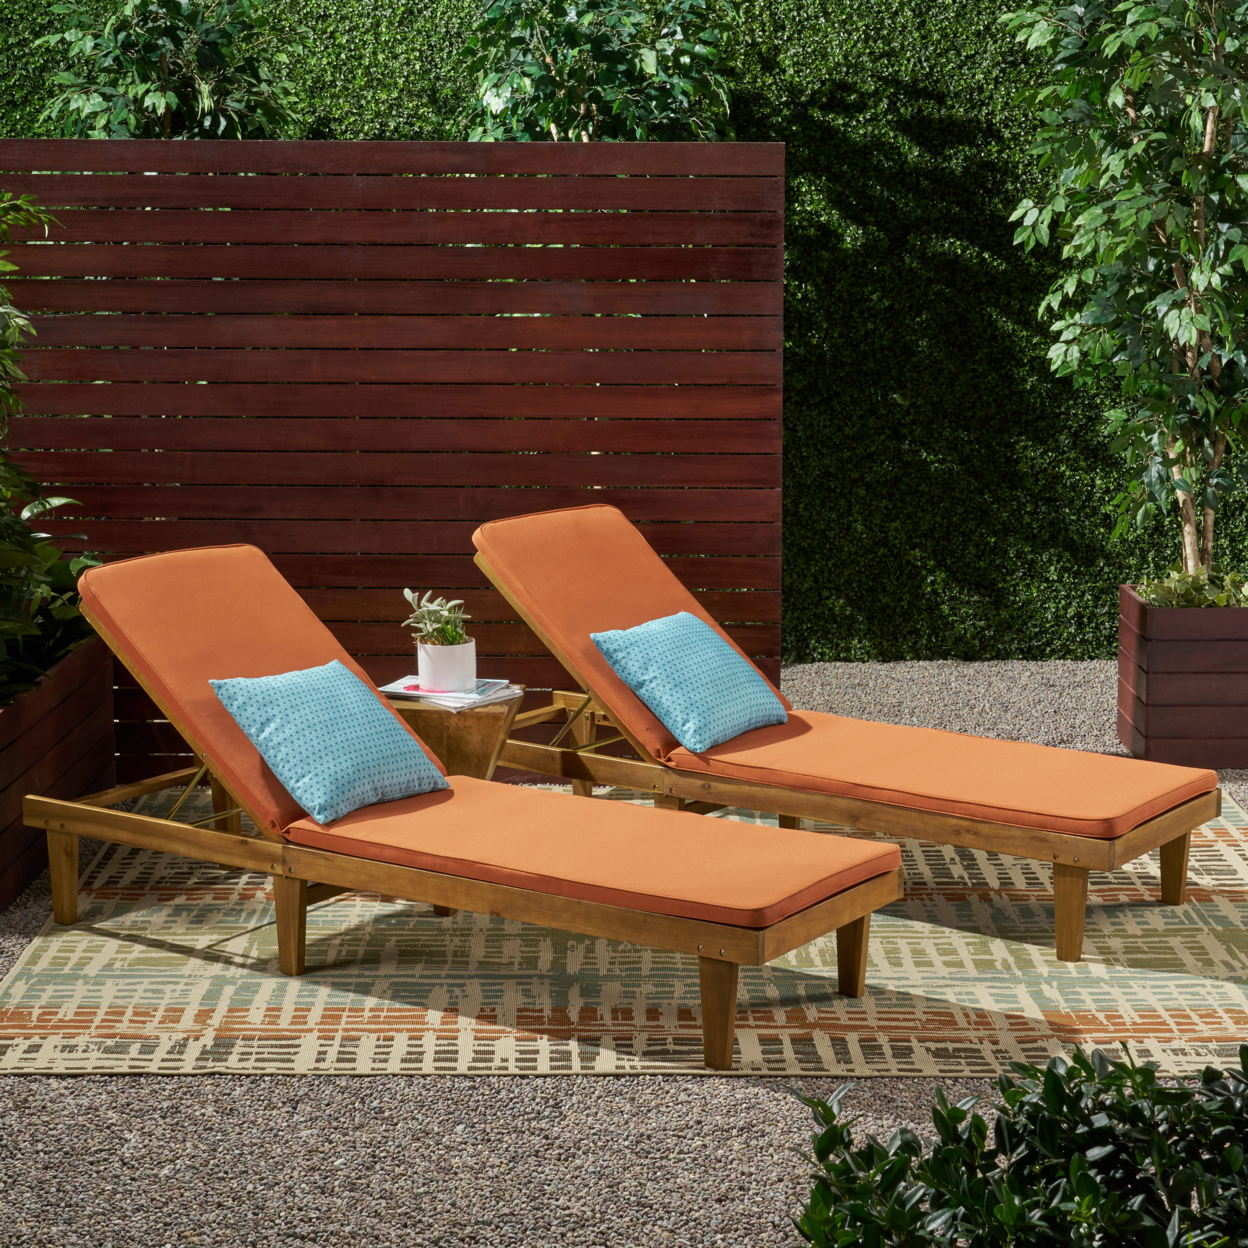 Madge Oudoor Modern Acacia Wood Chaise Lounge With Cushion (Set Of 2) - Teak Finish + Rust Orange